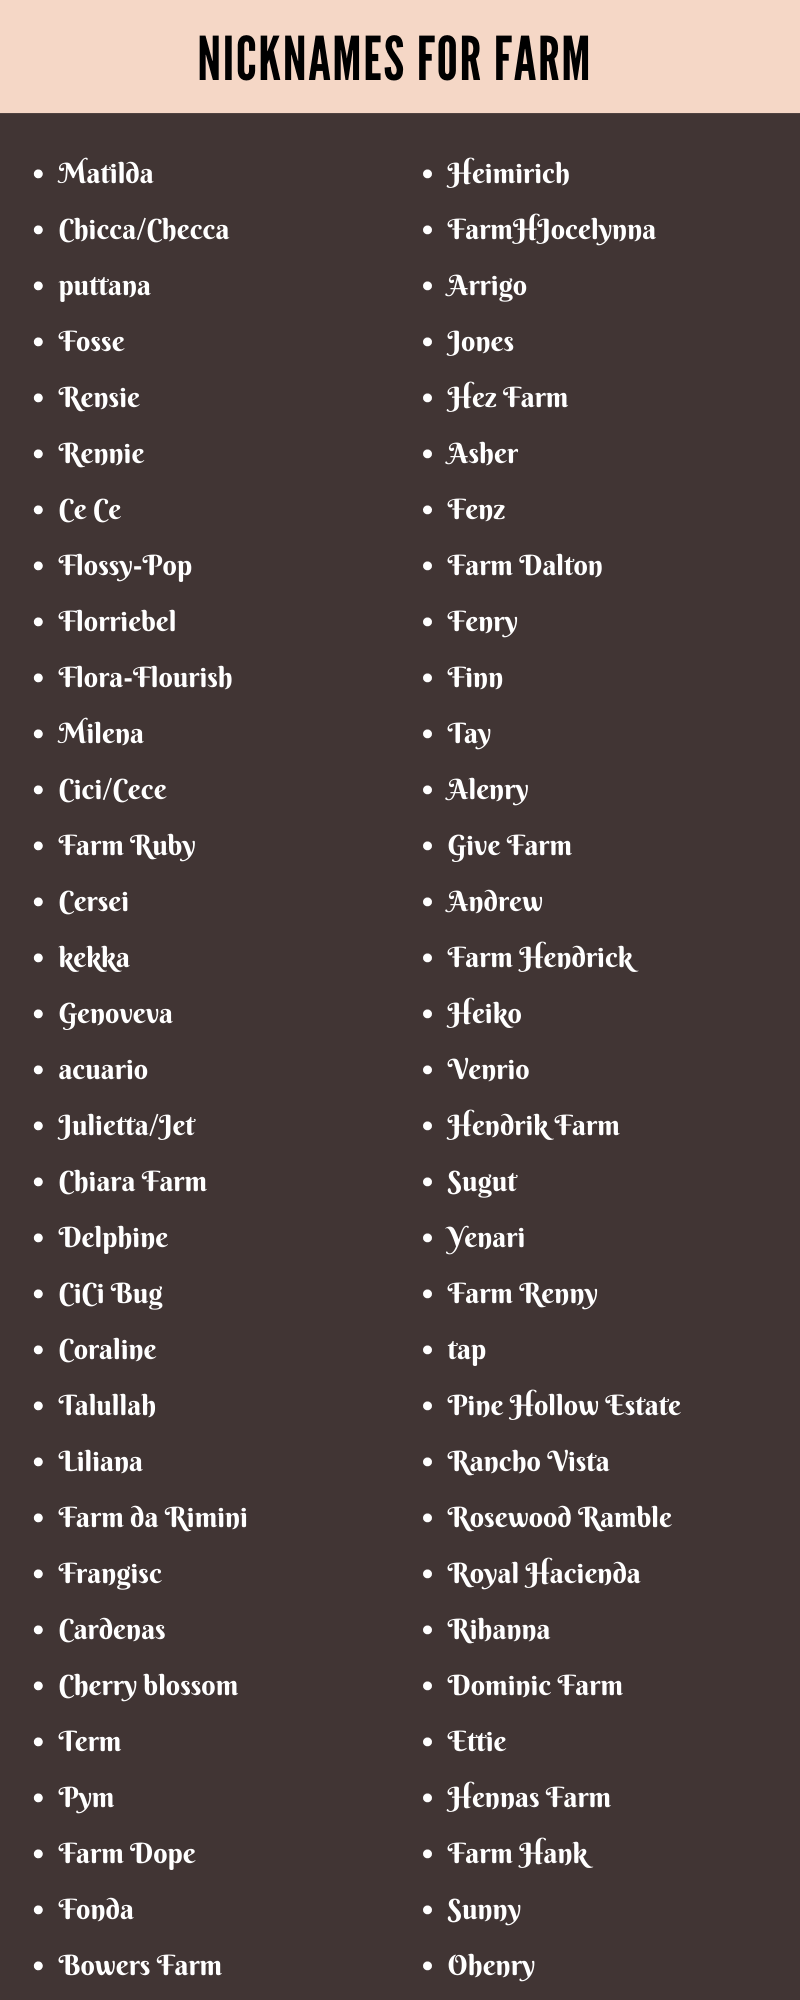 Nicknames for Farm